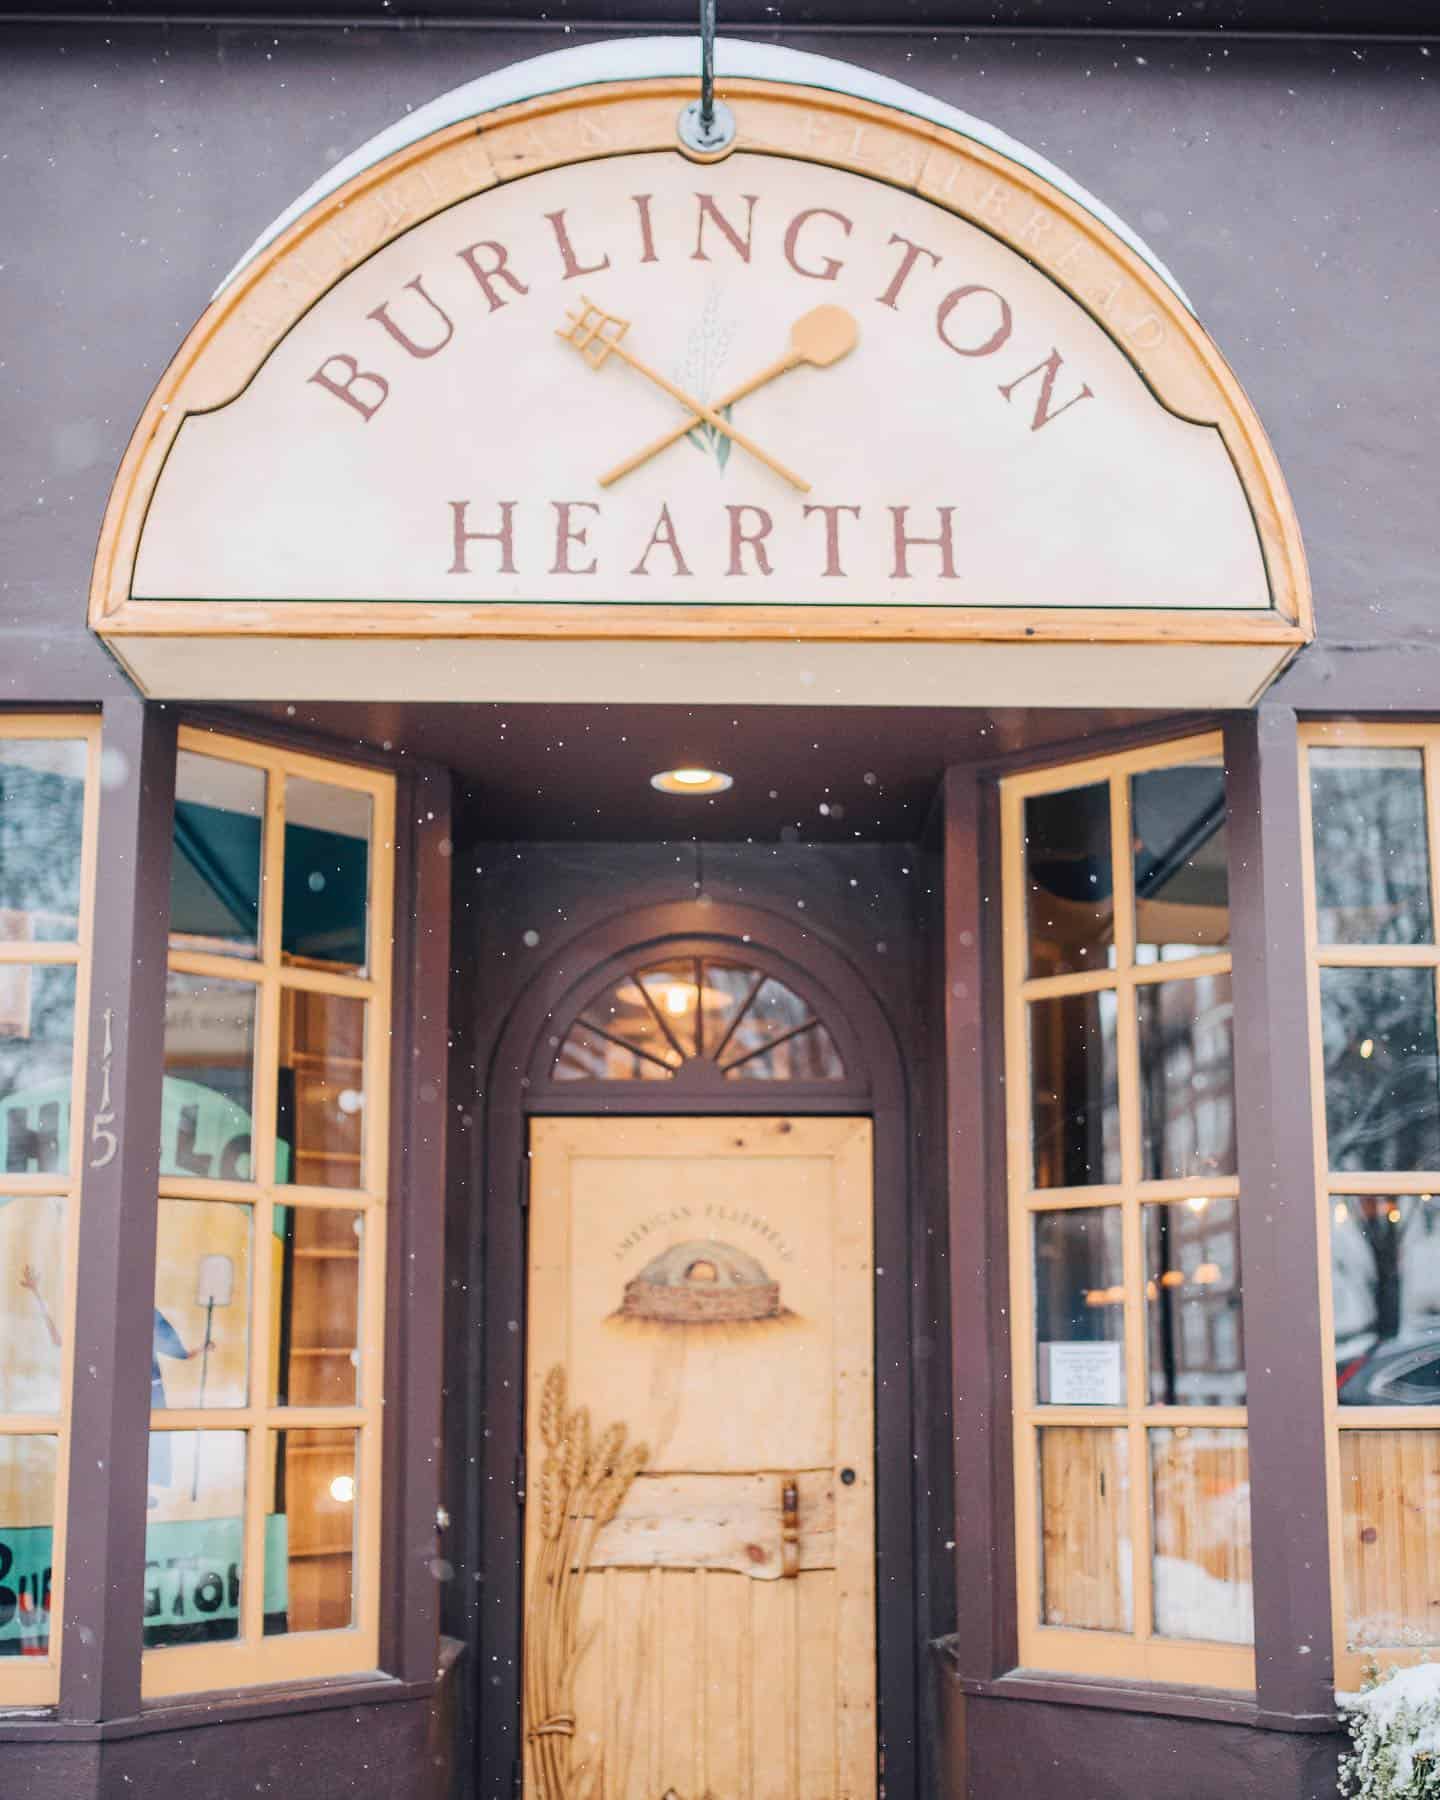 American Flatbread - Burlington Hearth - Winter Exterior Entrance